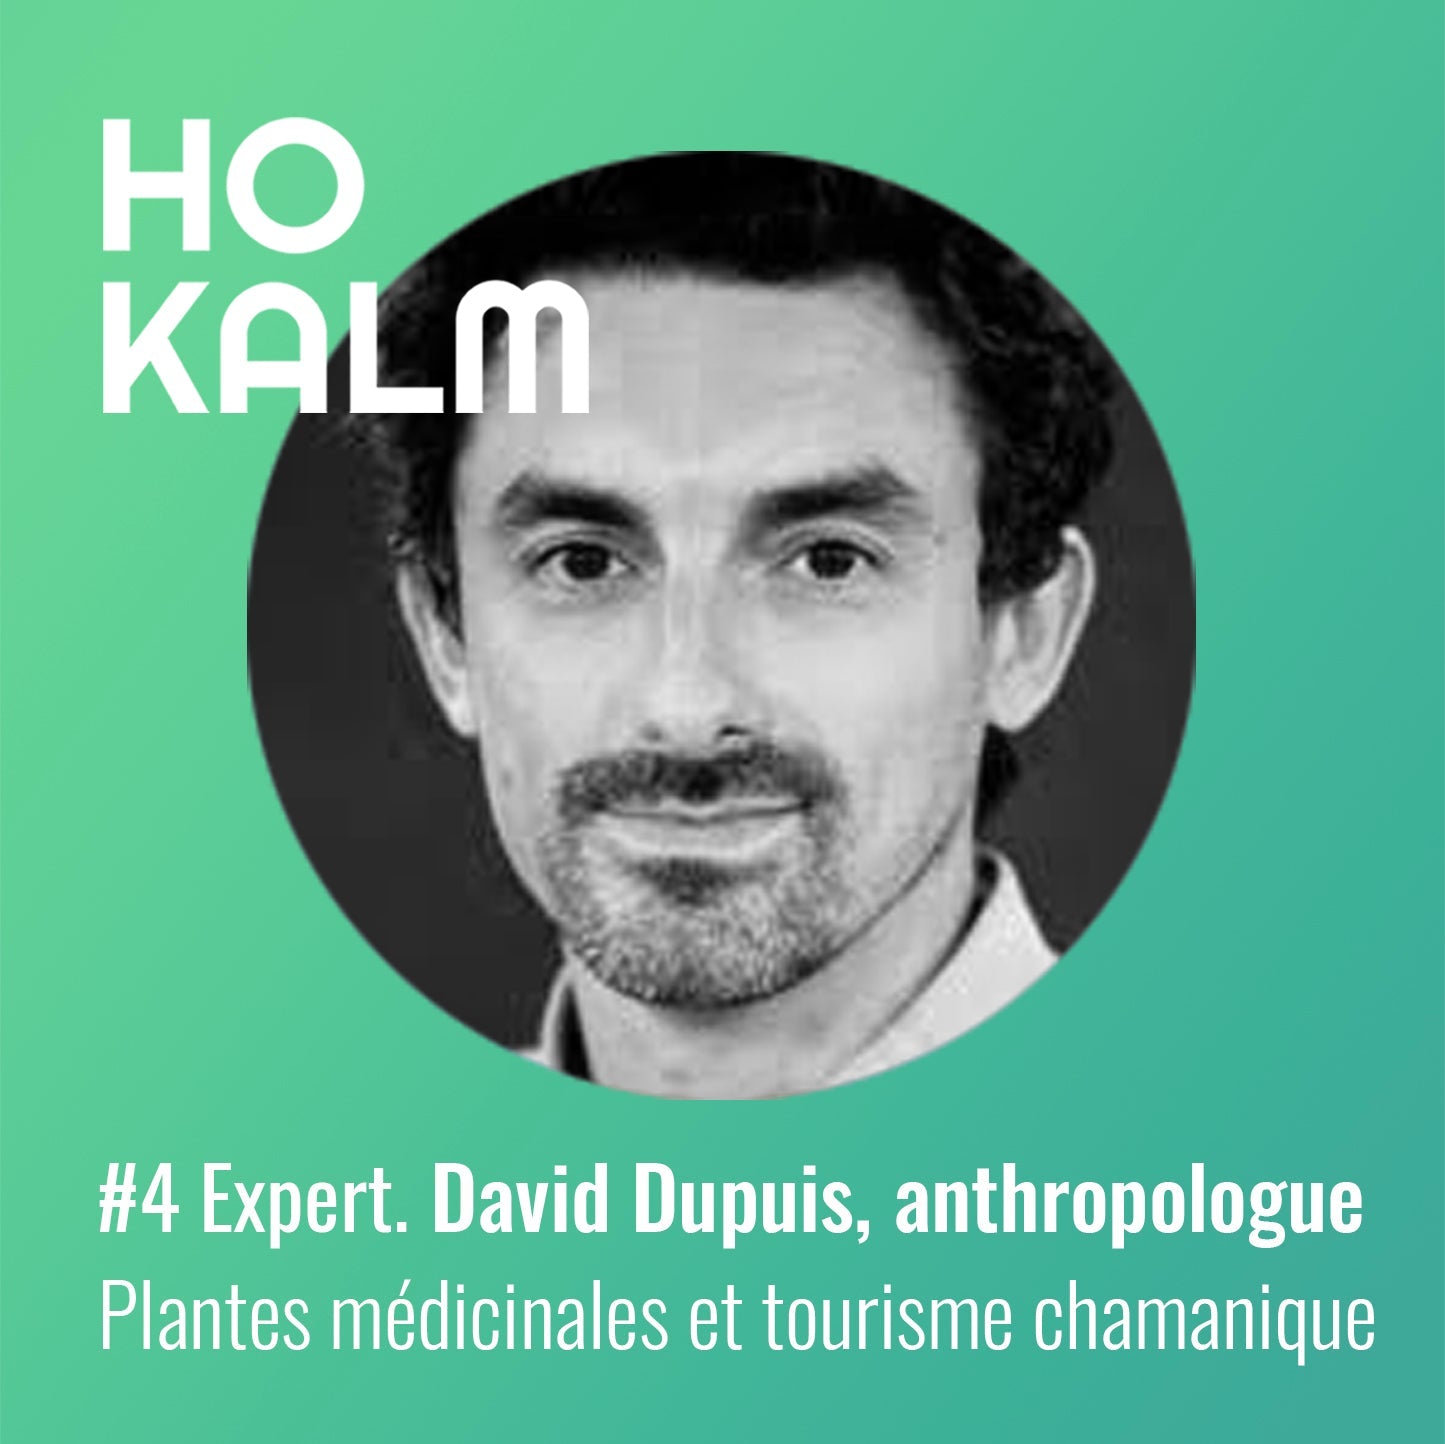 HO KALM : David Dupuis, anthropologue